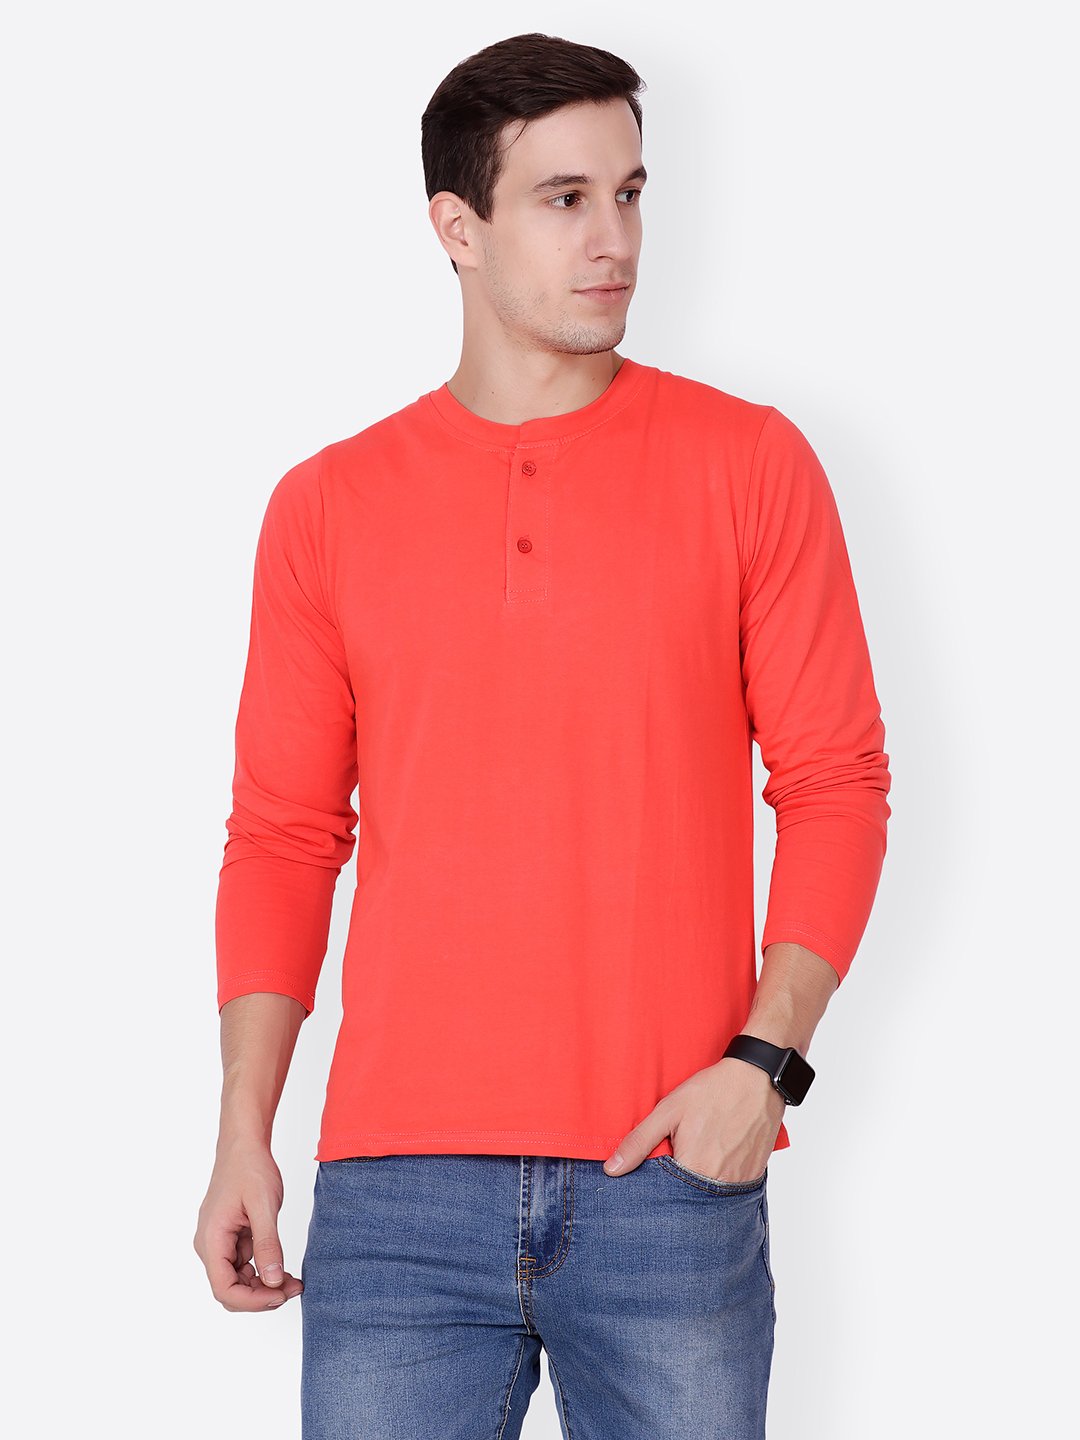 Orange Solid Tshirt